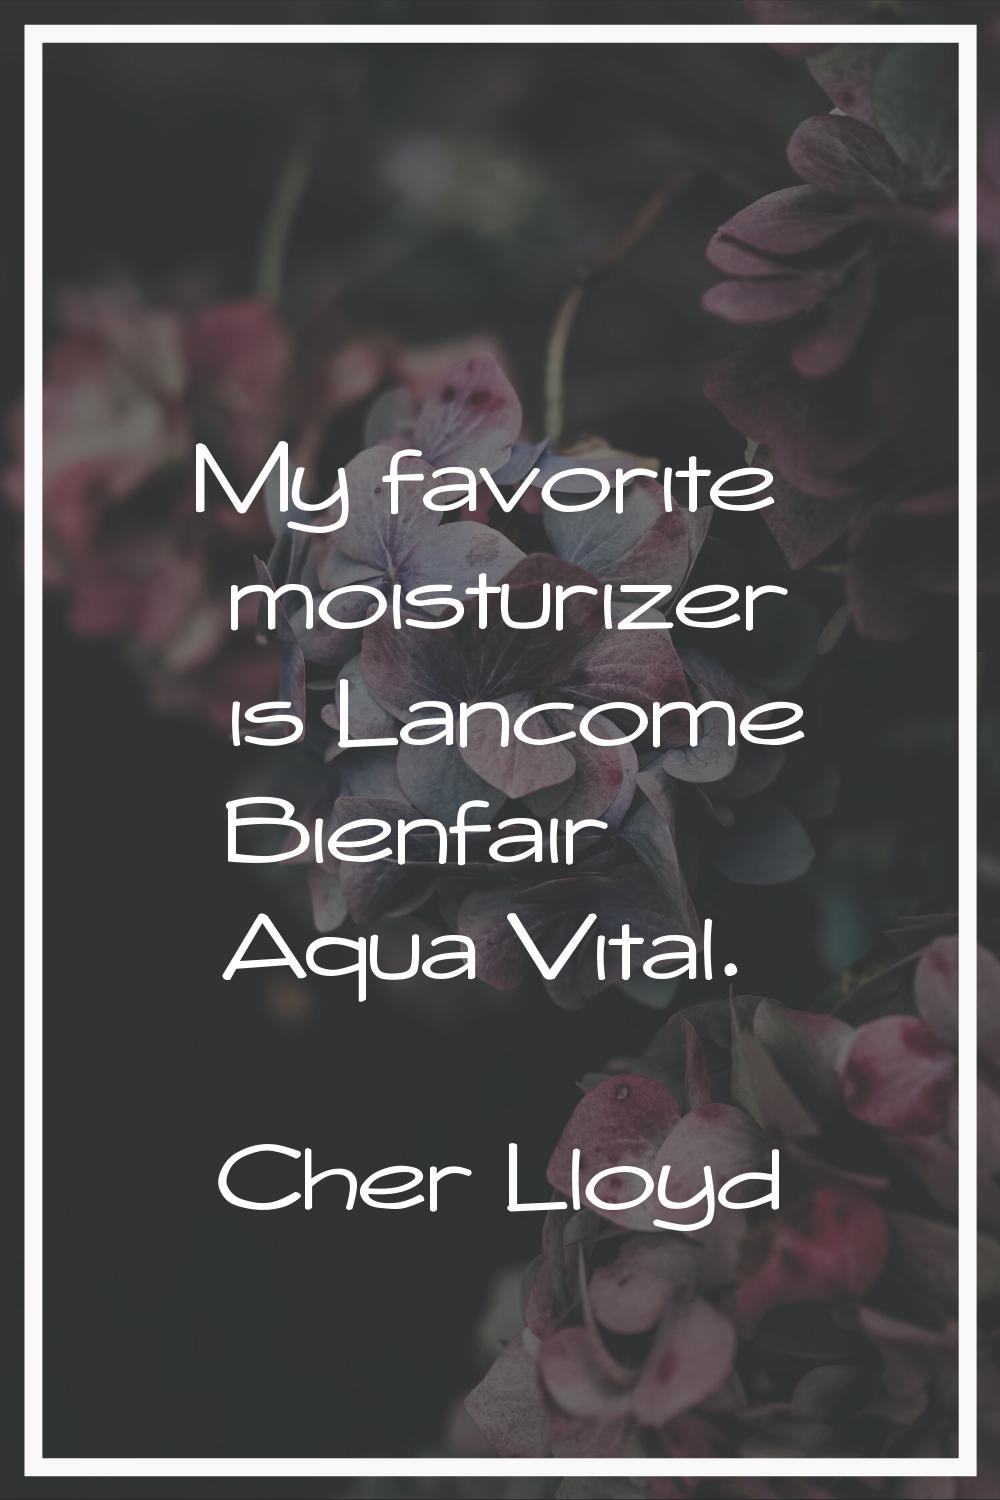 My favorite moisturizer is Lancome Bienfair Aqua Vital.